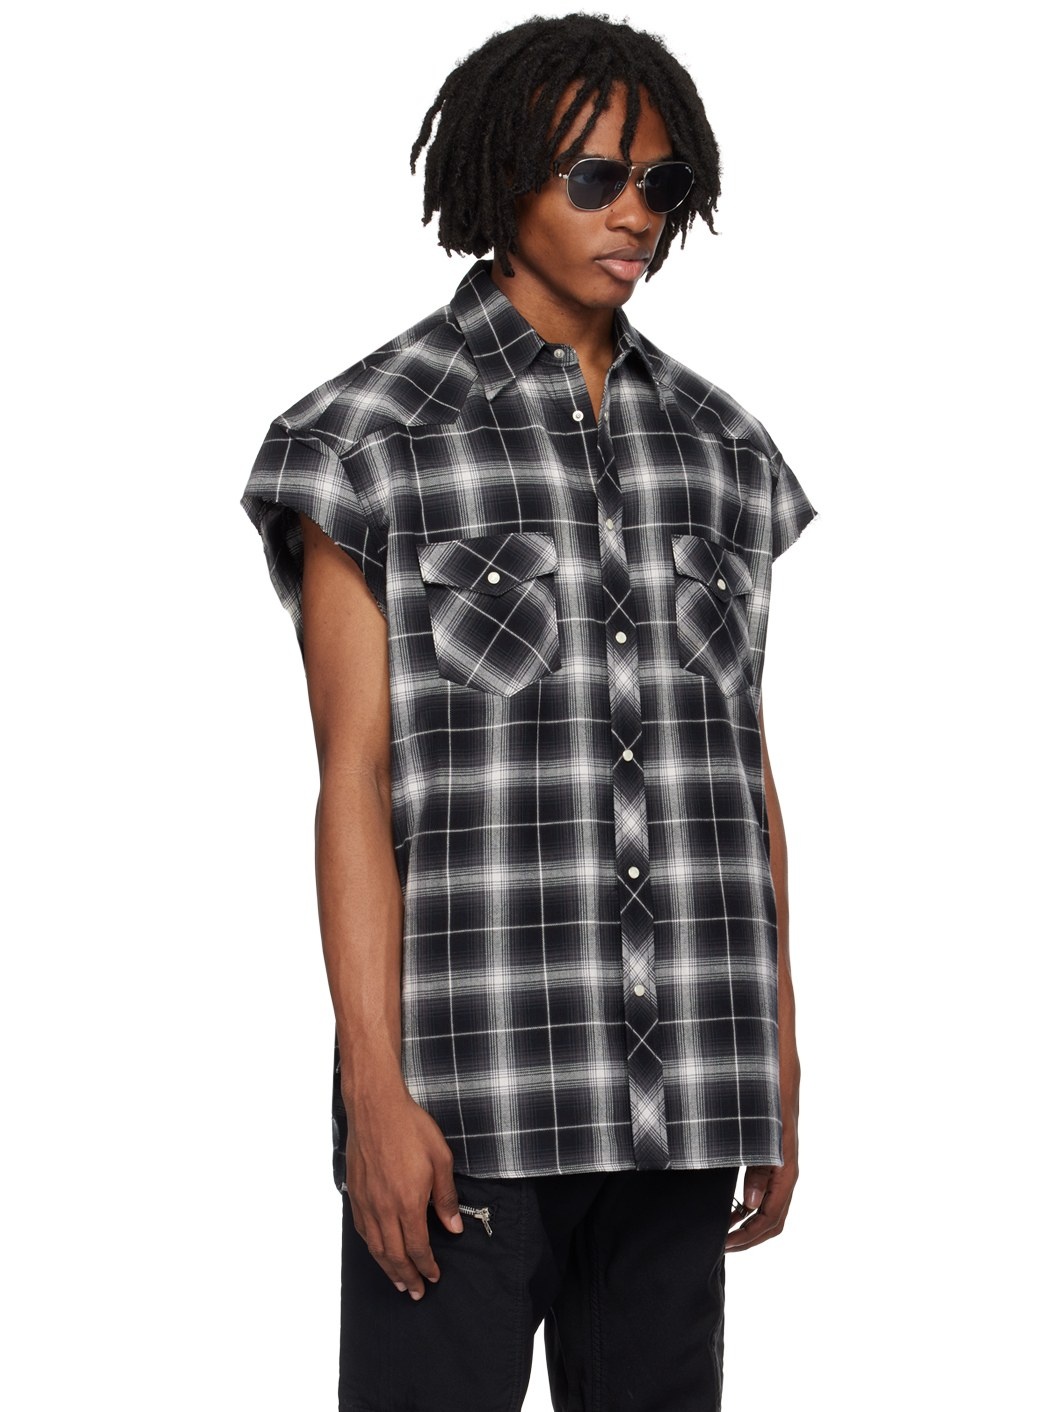 Black Rafu Edition Shirt - 2